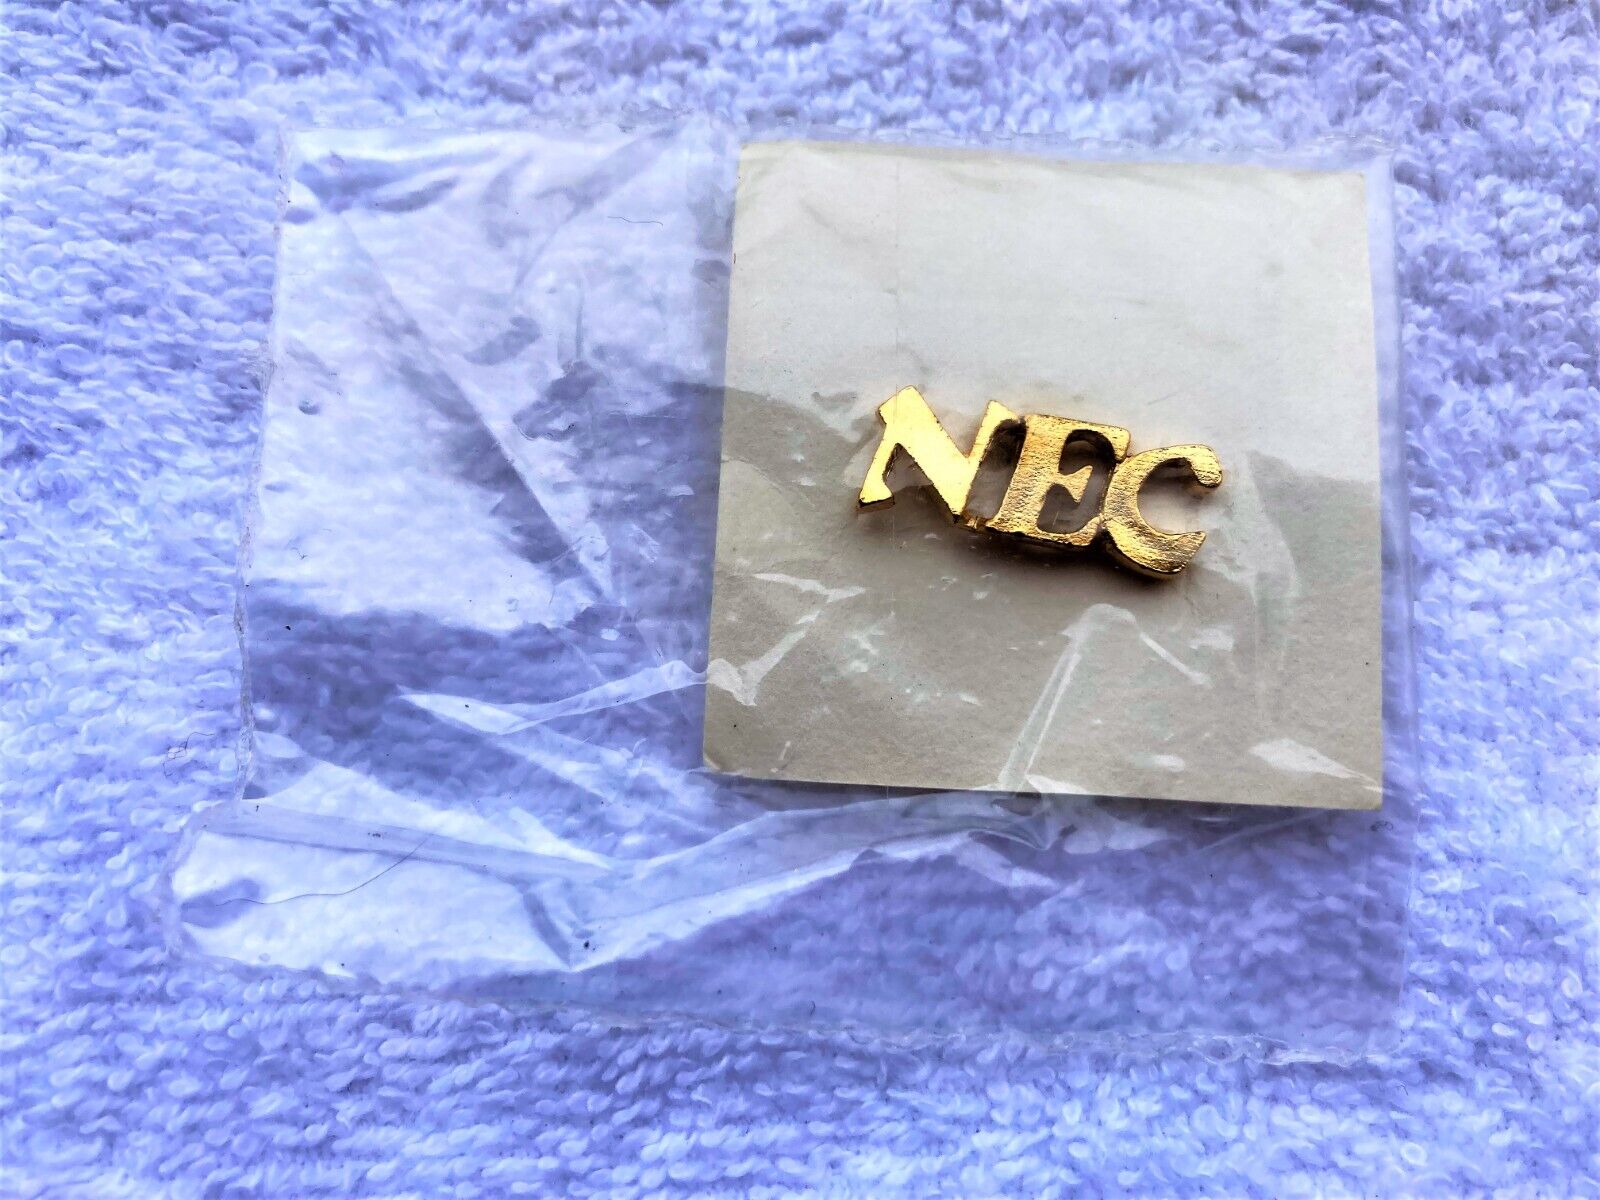 1979 Gold Color NEC Lapel Pin 1963-1991 Original Logo Union Made in USA SEALED